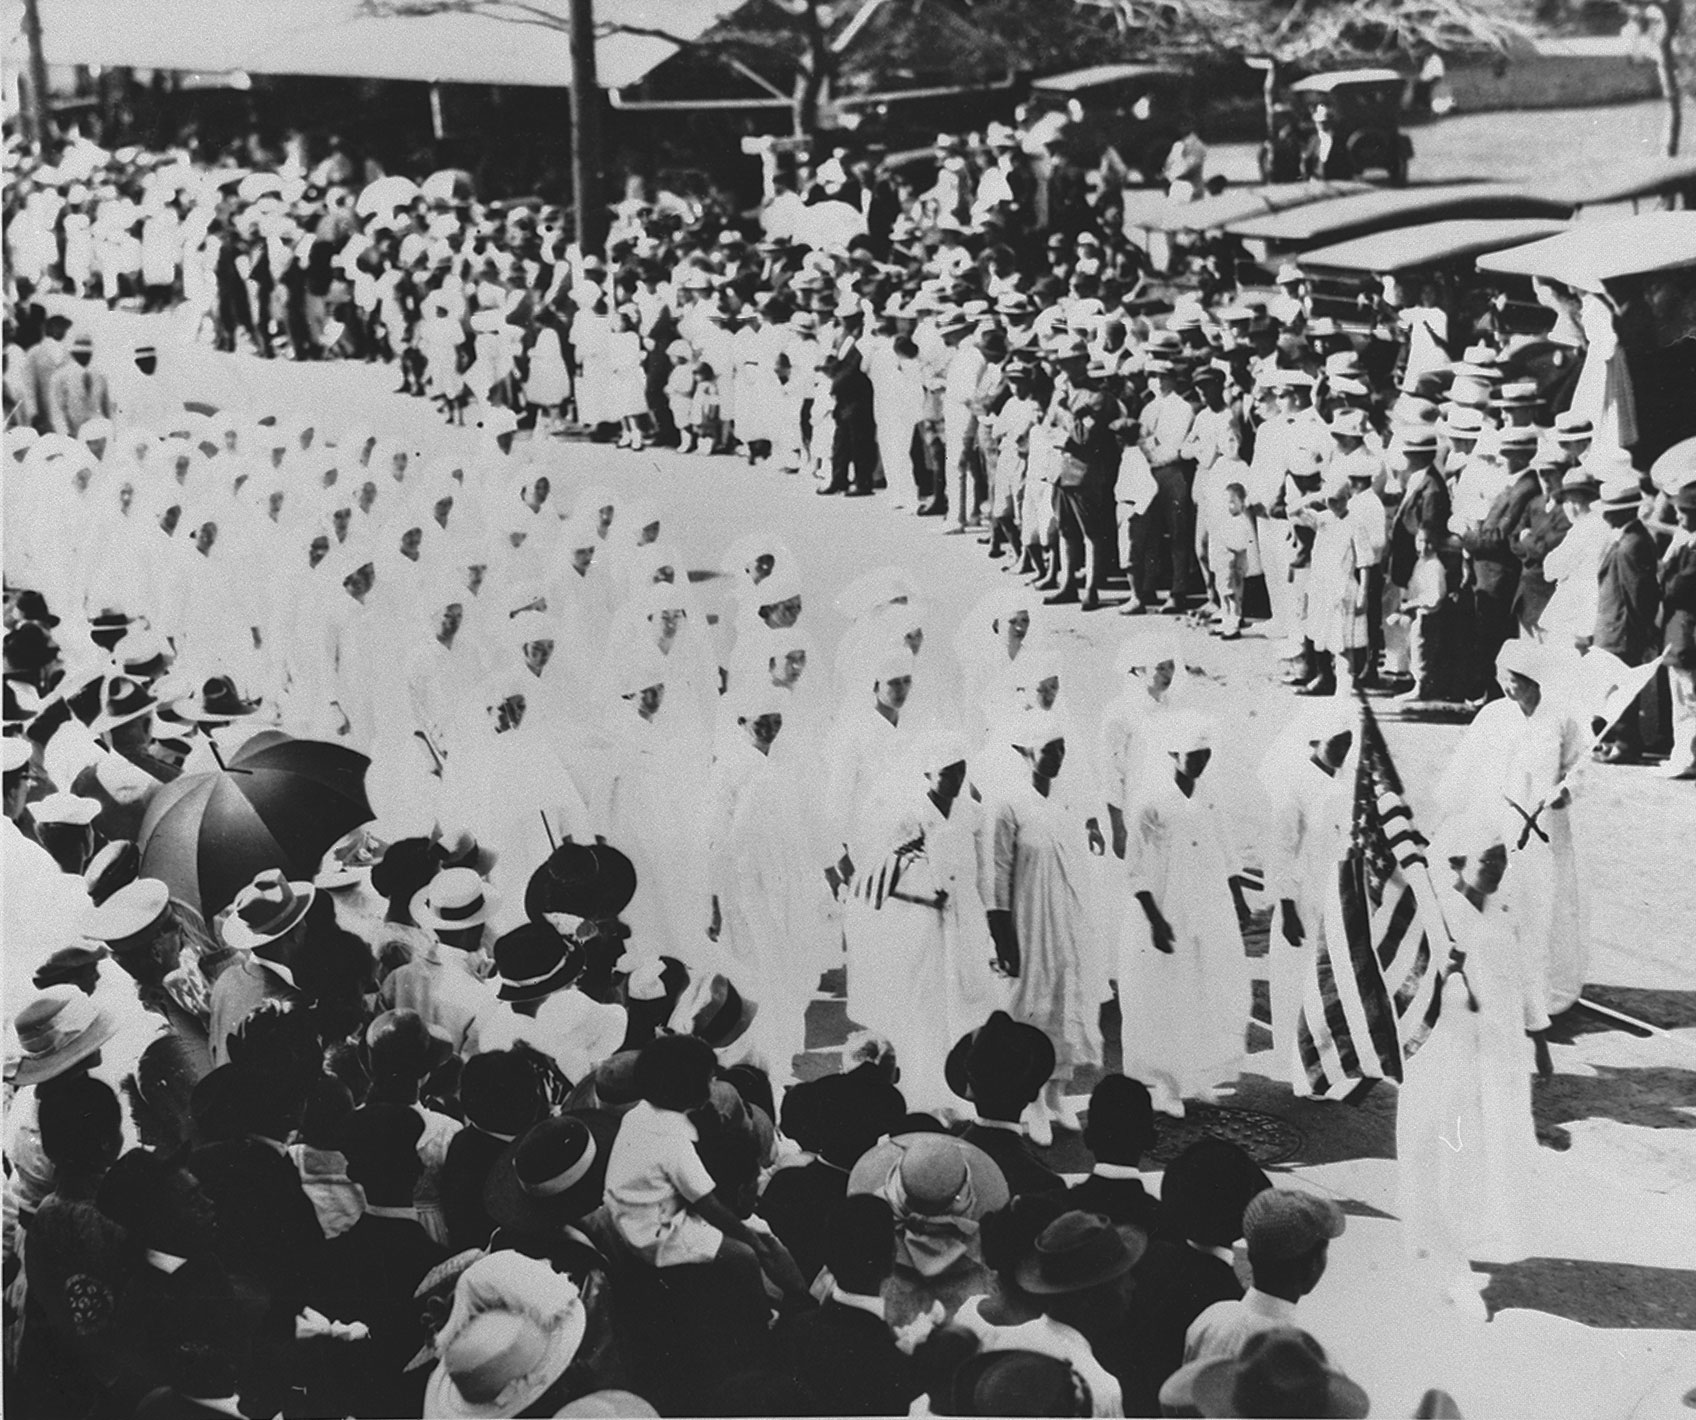 KWRS on Armistice Day (Veterans Day) Parade, Nov 11, 1921